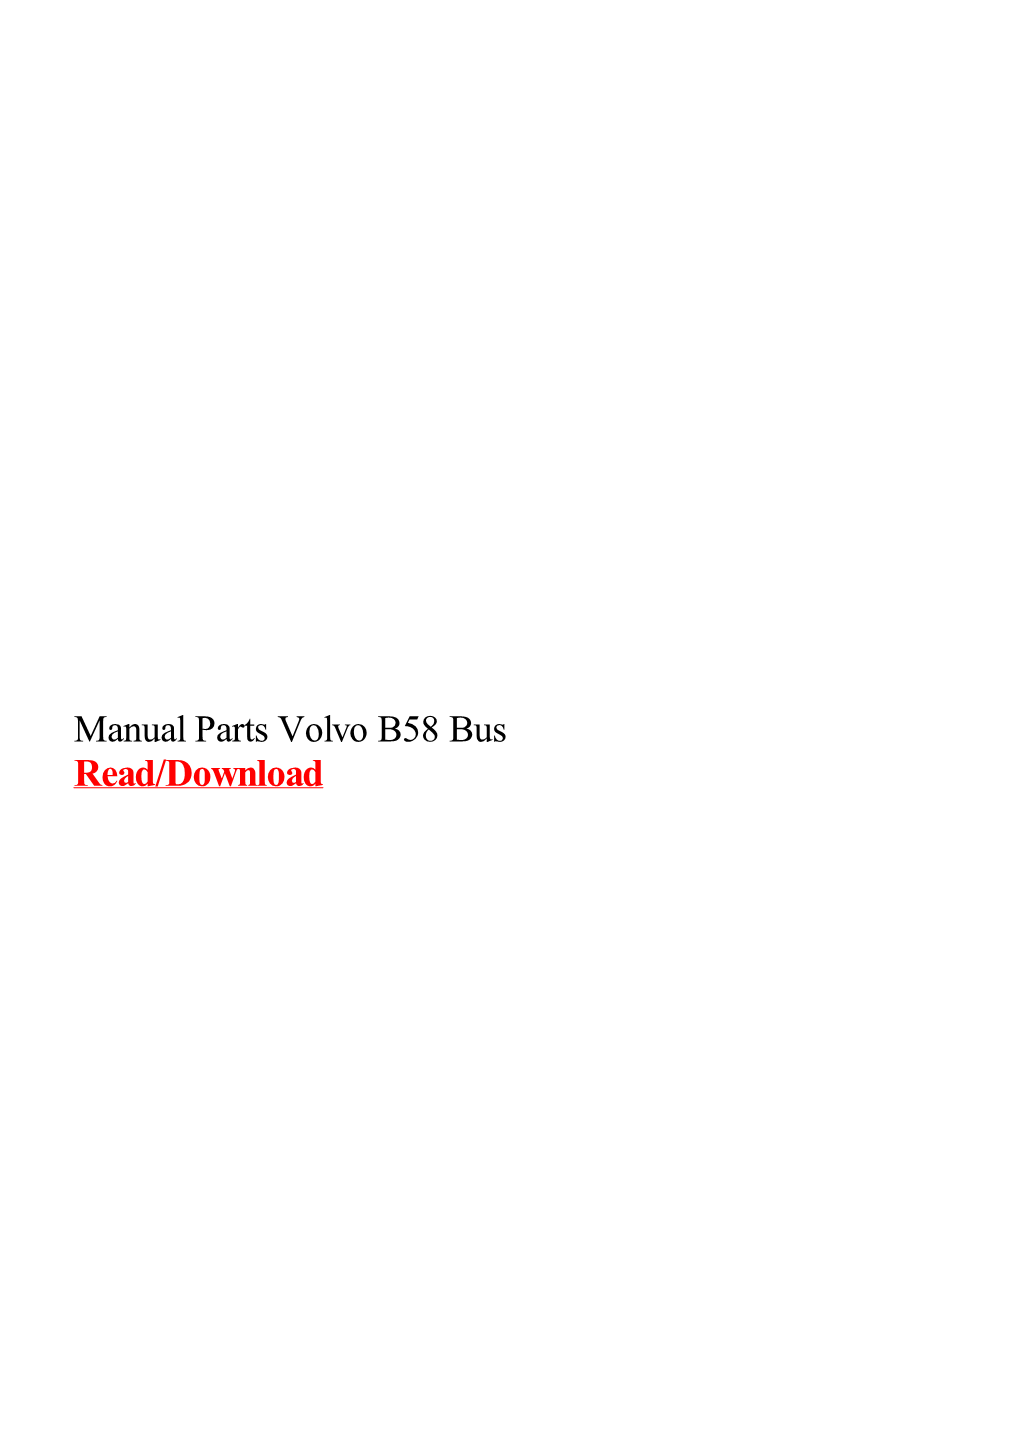 Manual Parts Volvo B58 Bus